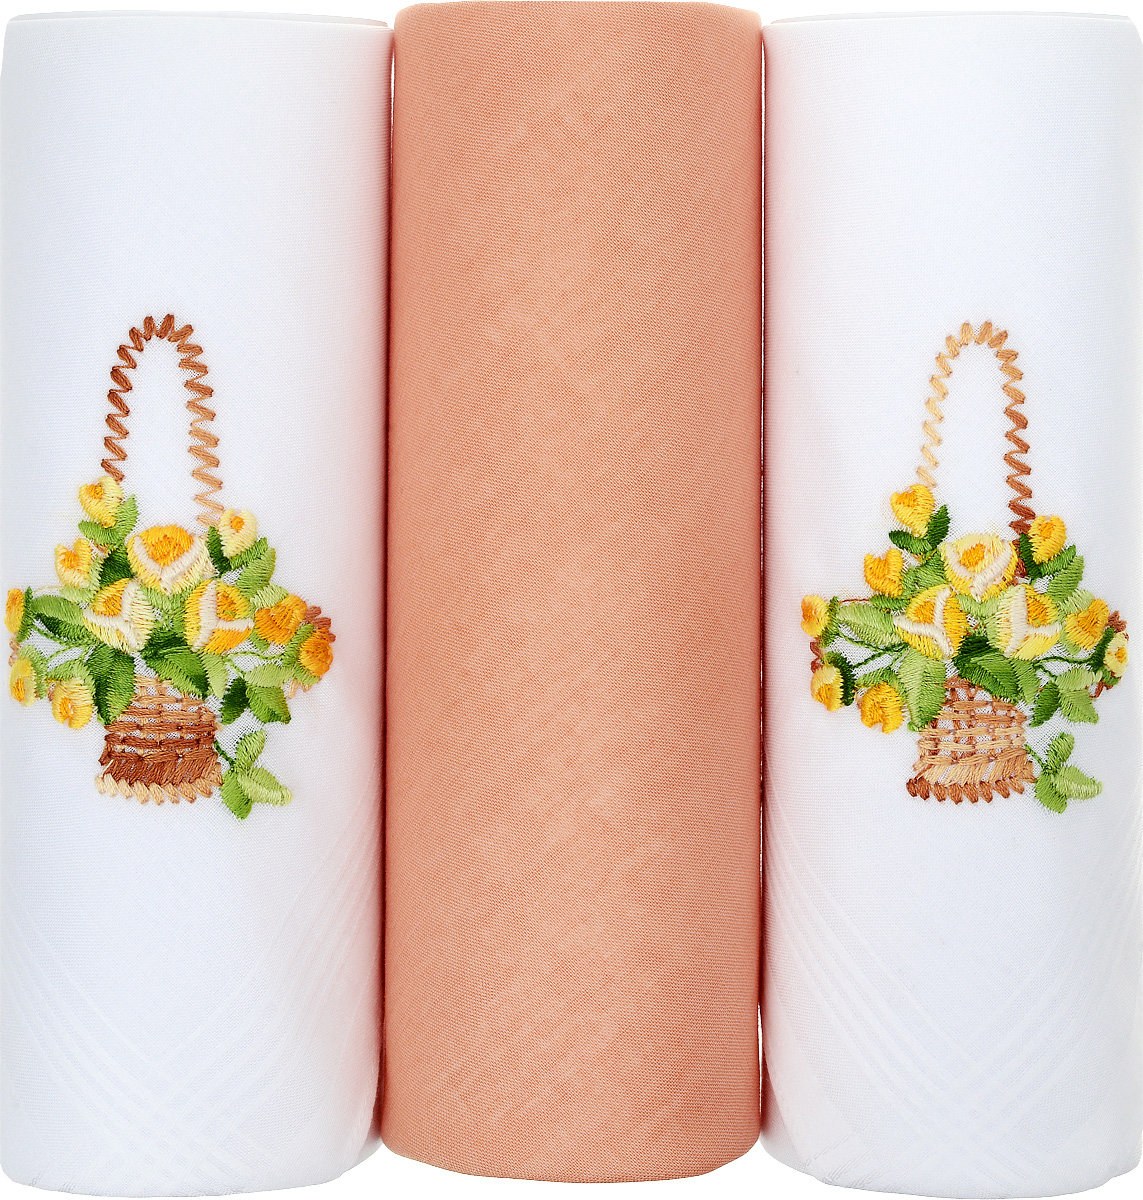 Платок носовой женский Zlata Korunka, цвет: белый, оранжевый. 25605-10. Размер 30 х 30 см, 3 шт